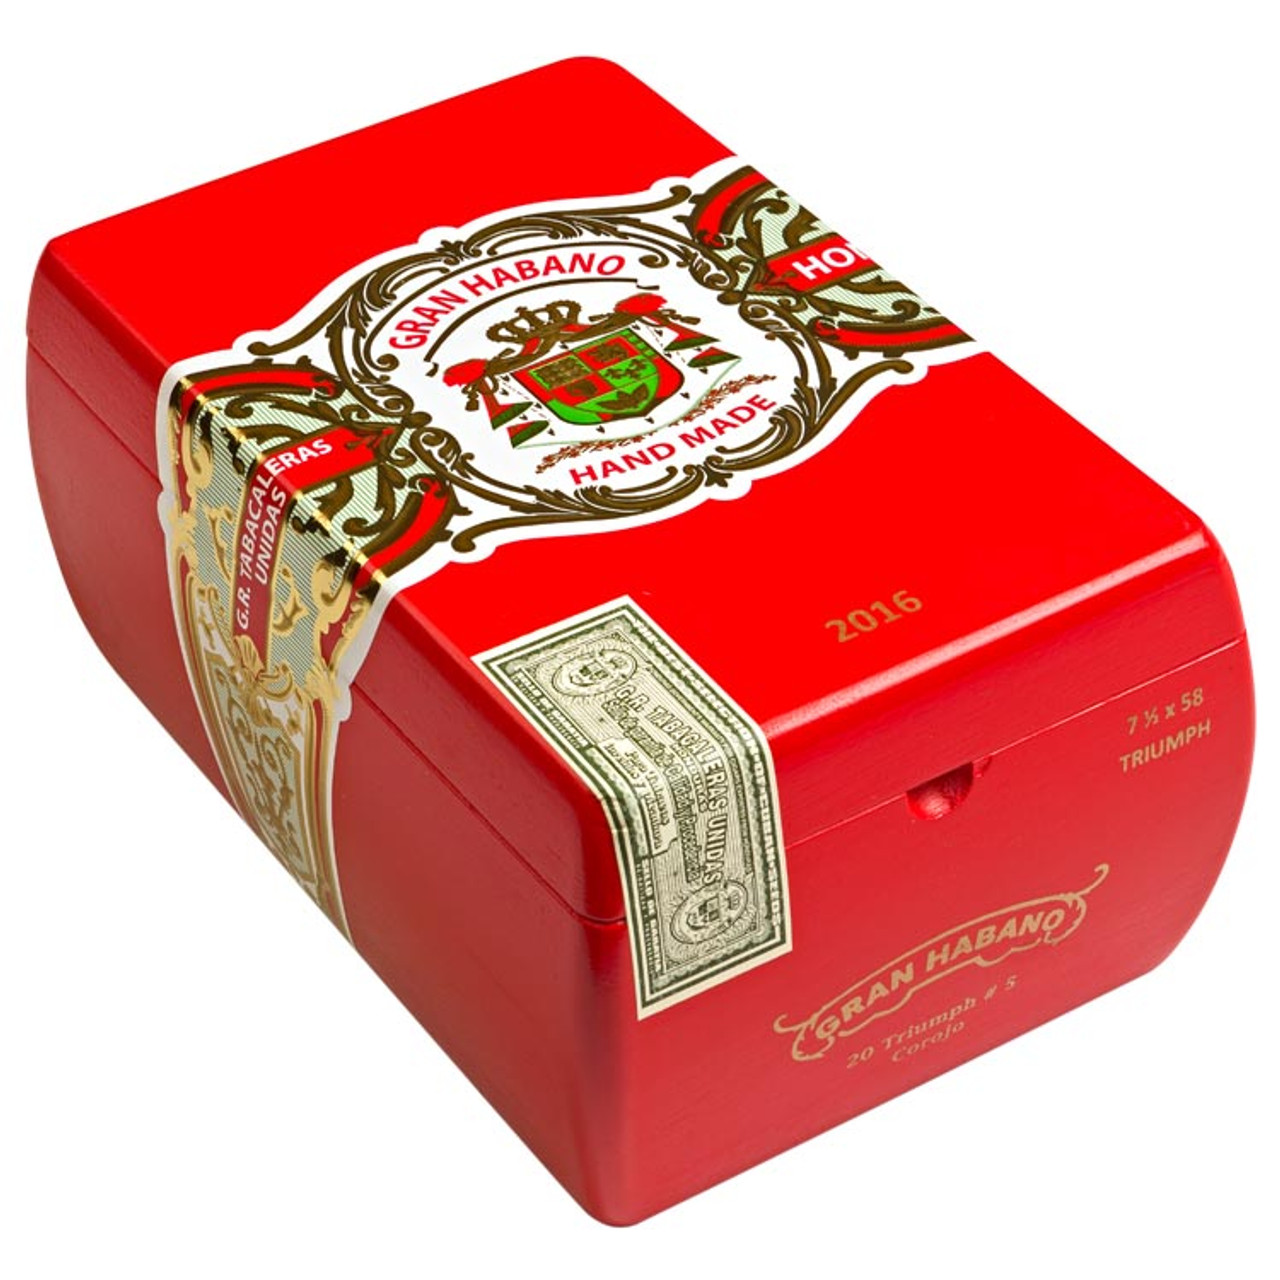 Gran Habano #5 Corojo Triumph Cigars - 7.5 x 58 (Box of 20)